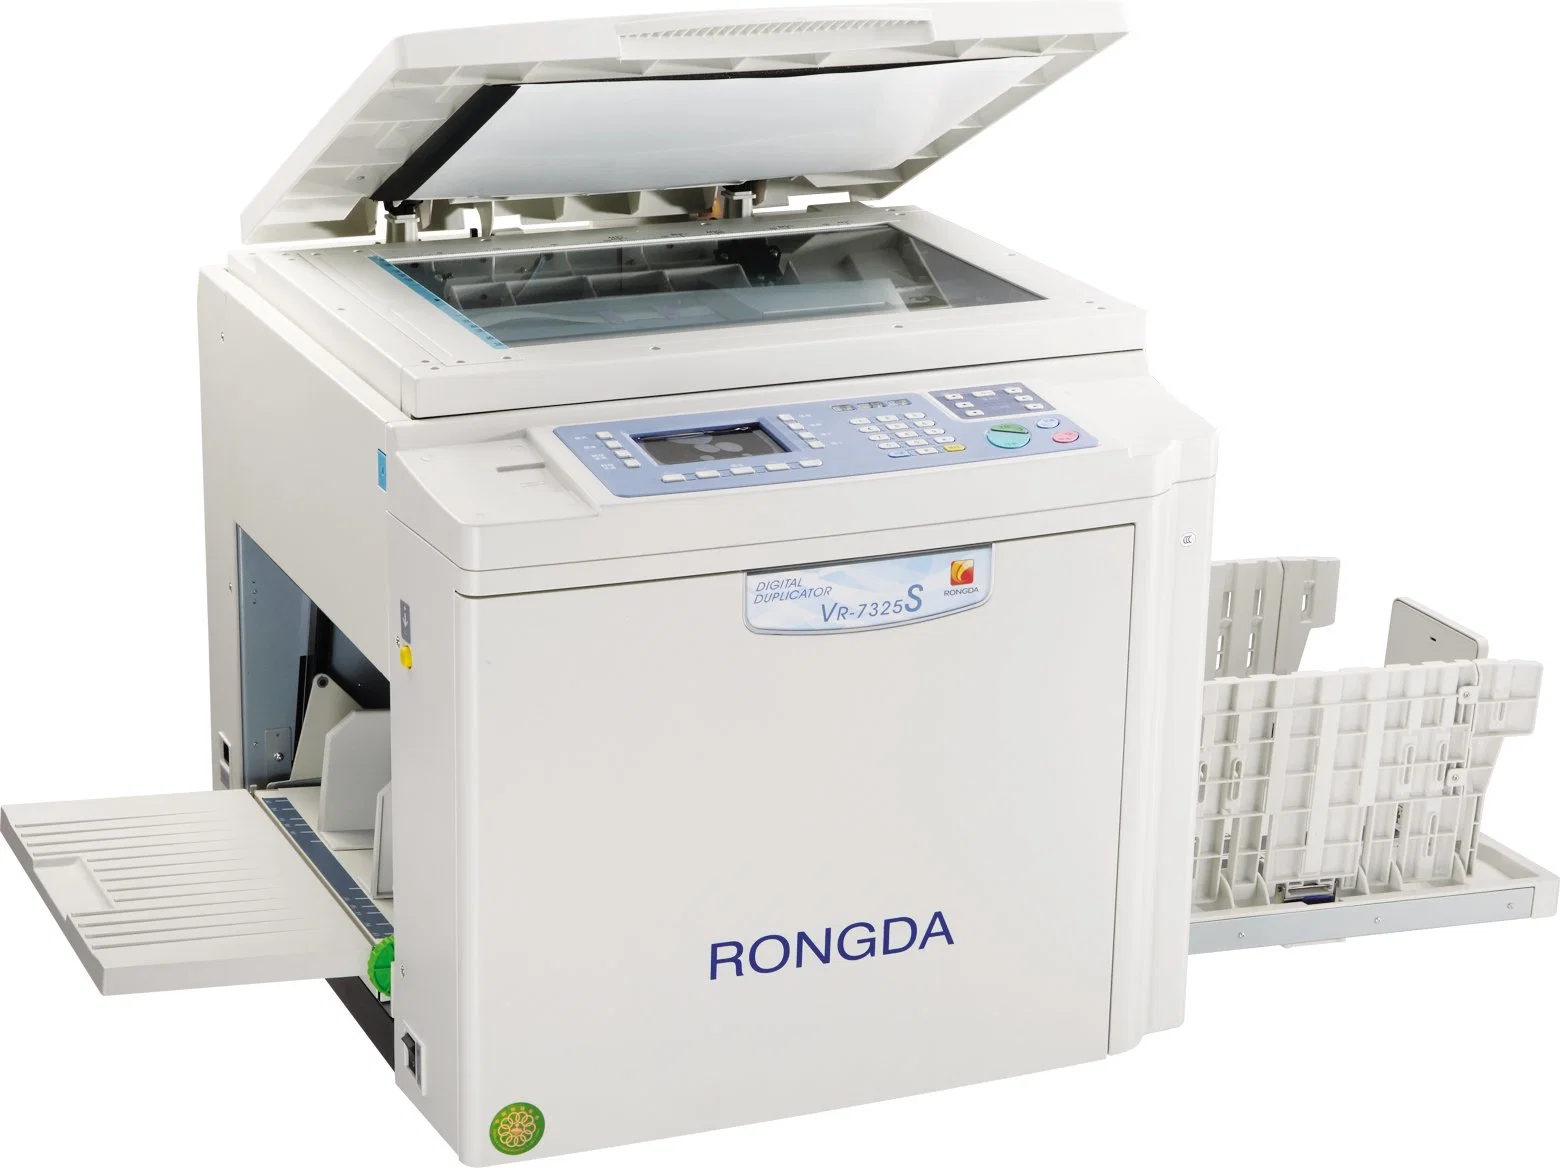 Rongda Vr-7325s Digital Printing Equipment